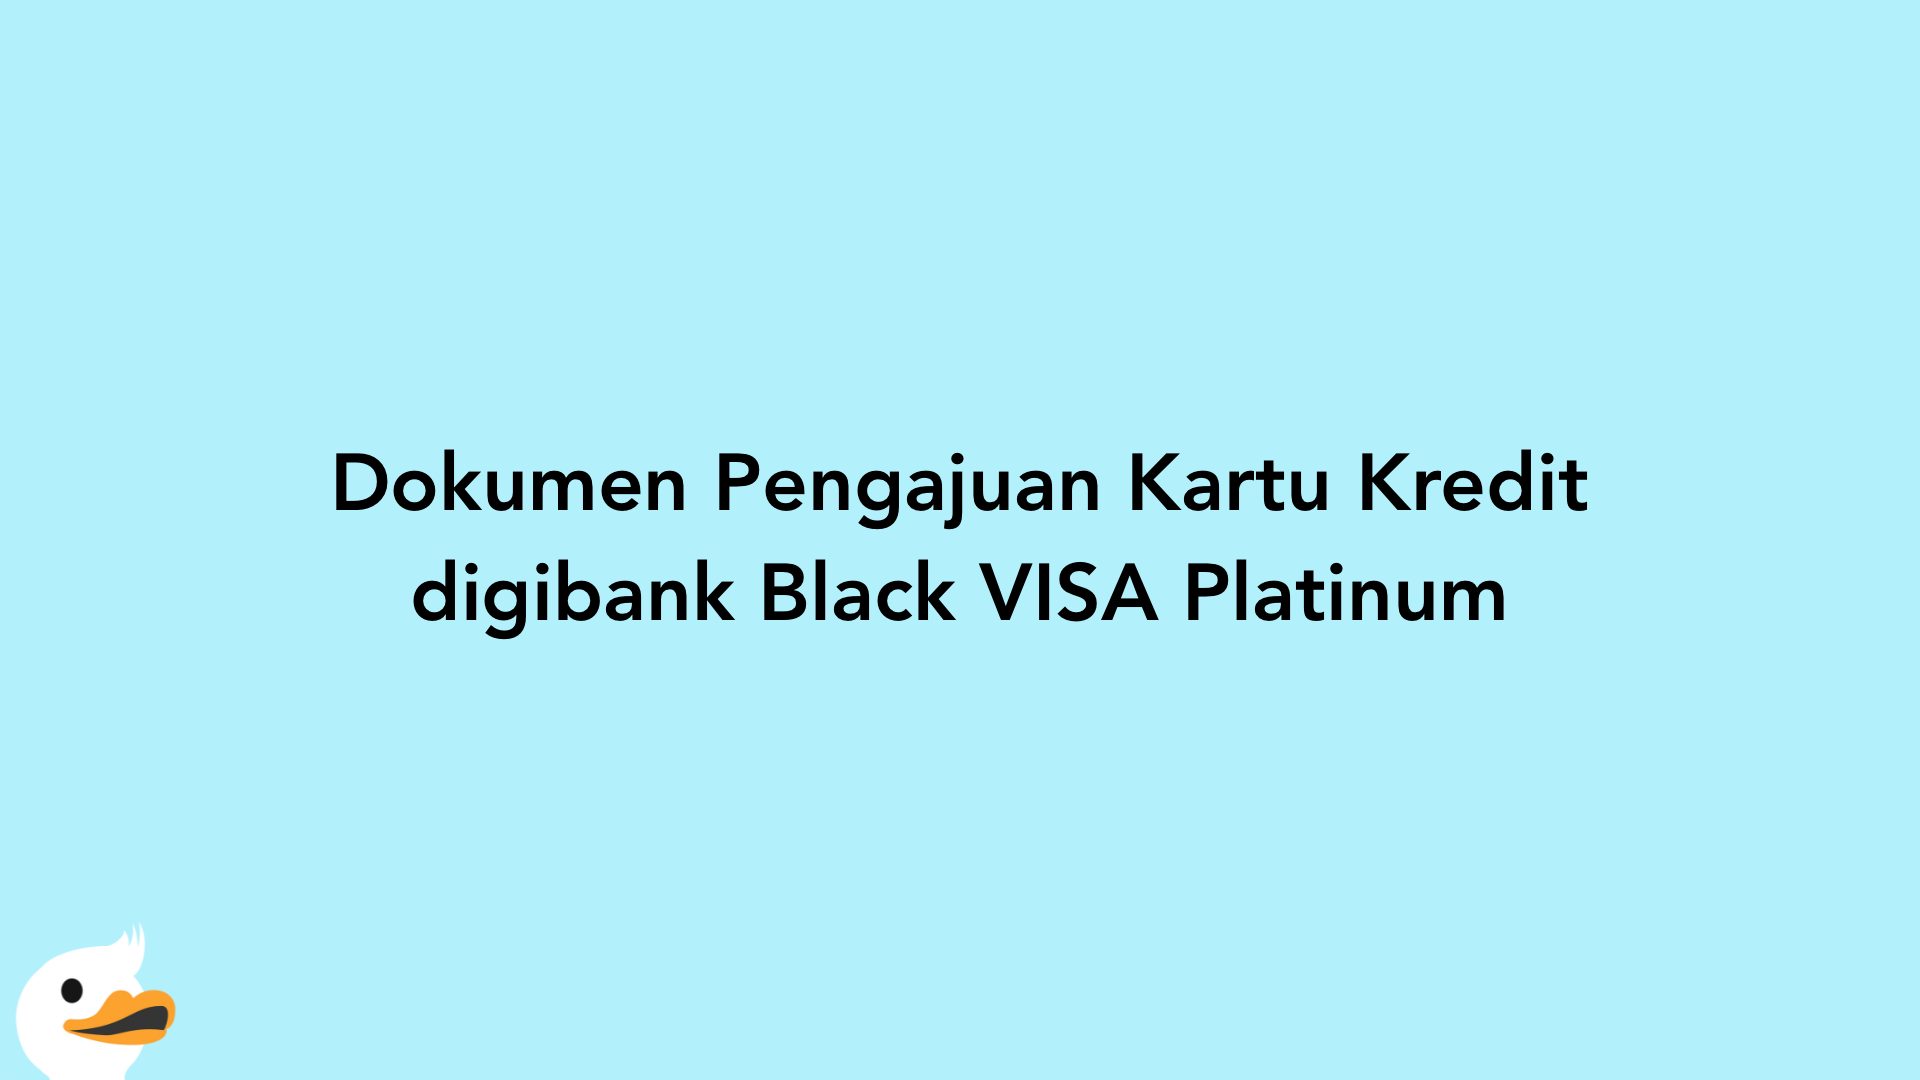 Dokumen Pengajuan Kartu Kredit digibank Black VISA Platinum